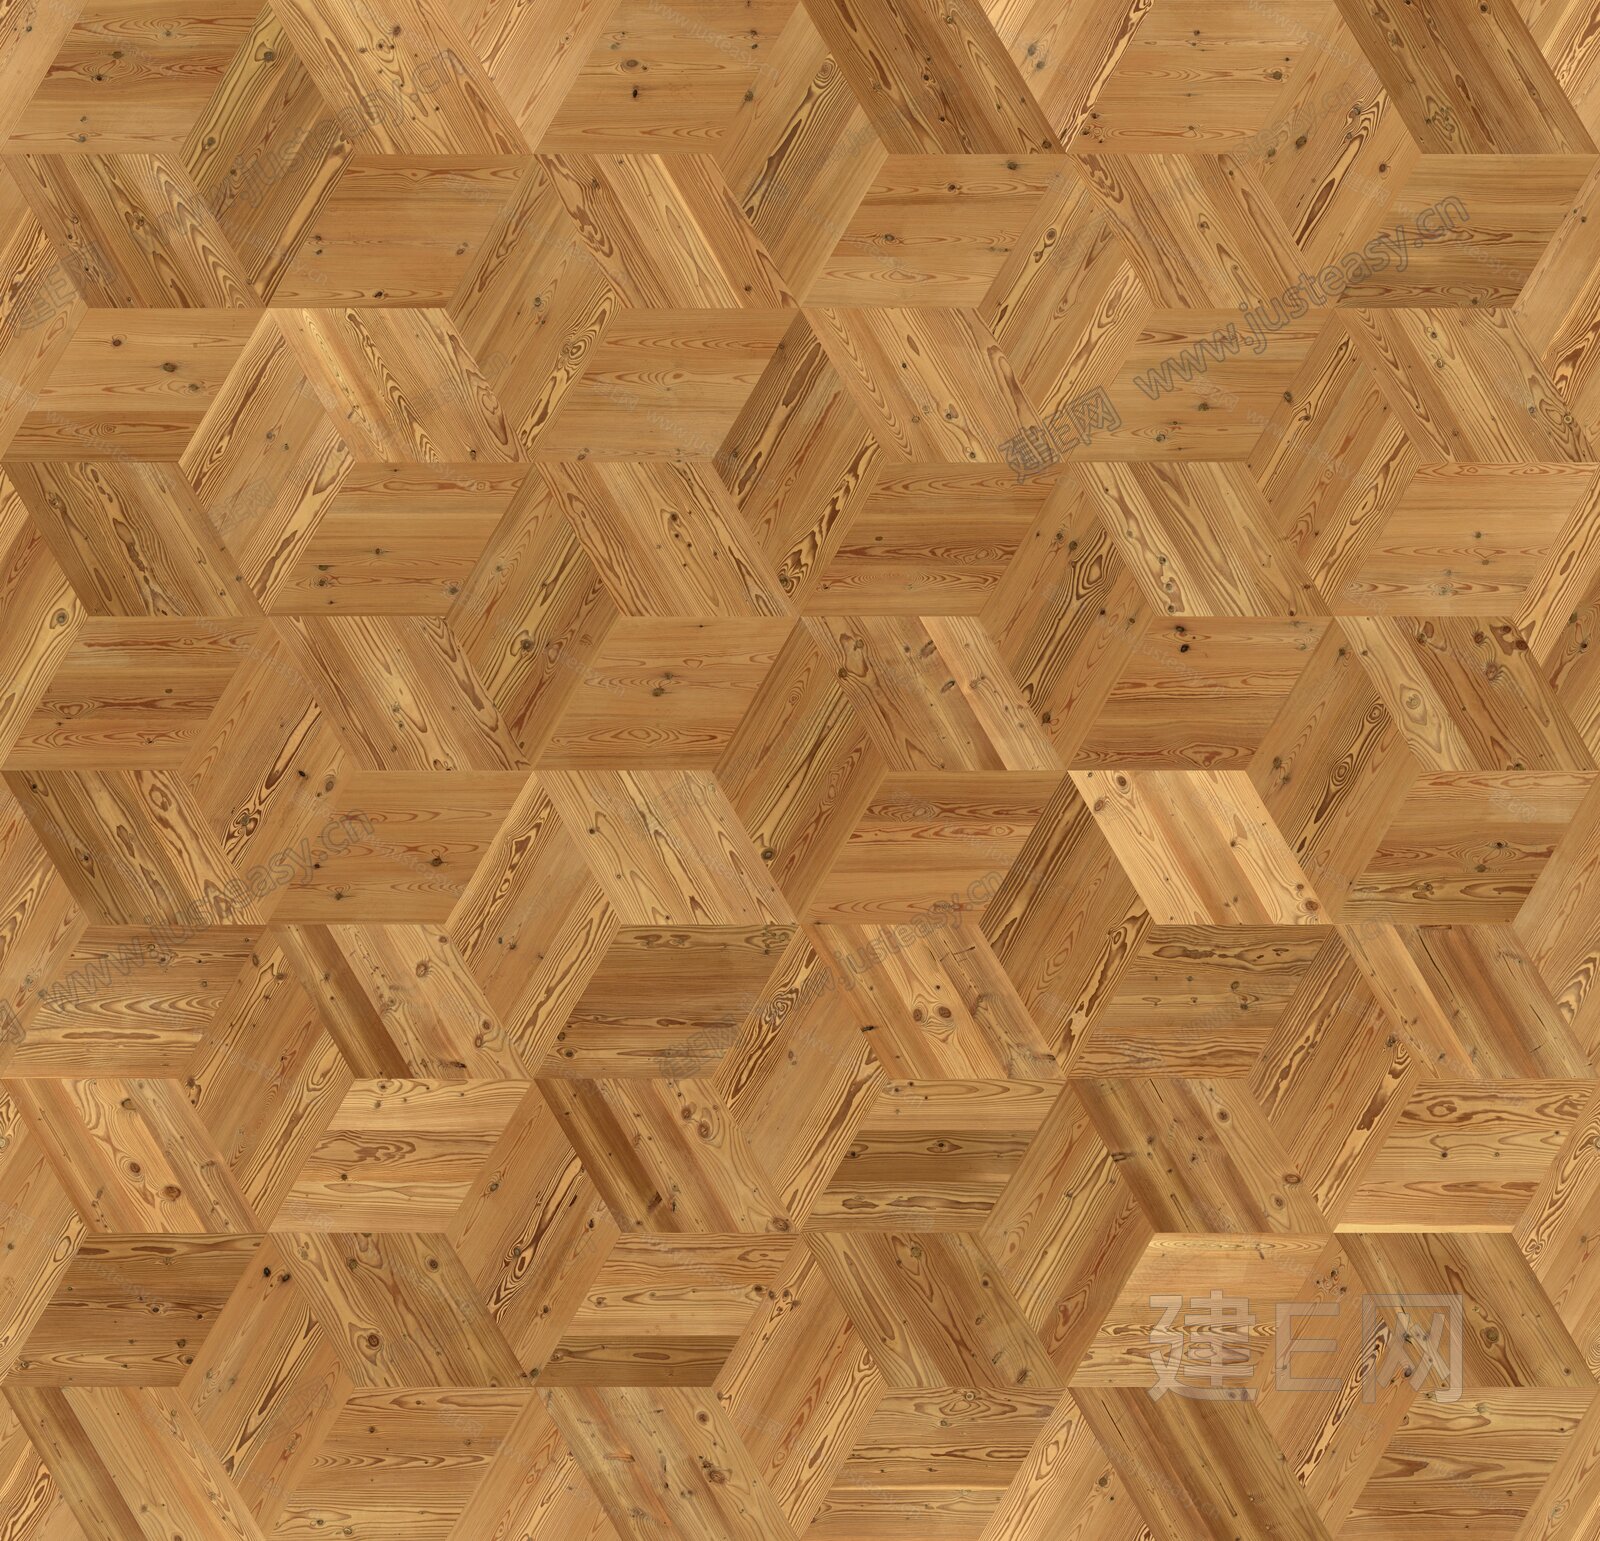 【3D贴图】木地板-3d材质贴图下载_贴图素材_3d贴图网 - 建E网3dmax材质库